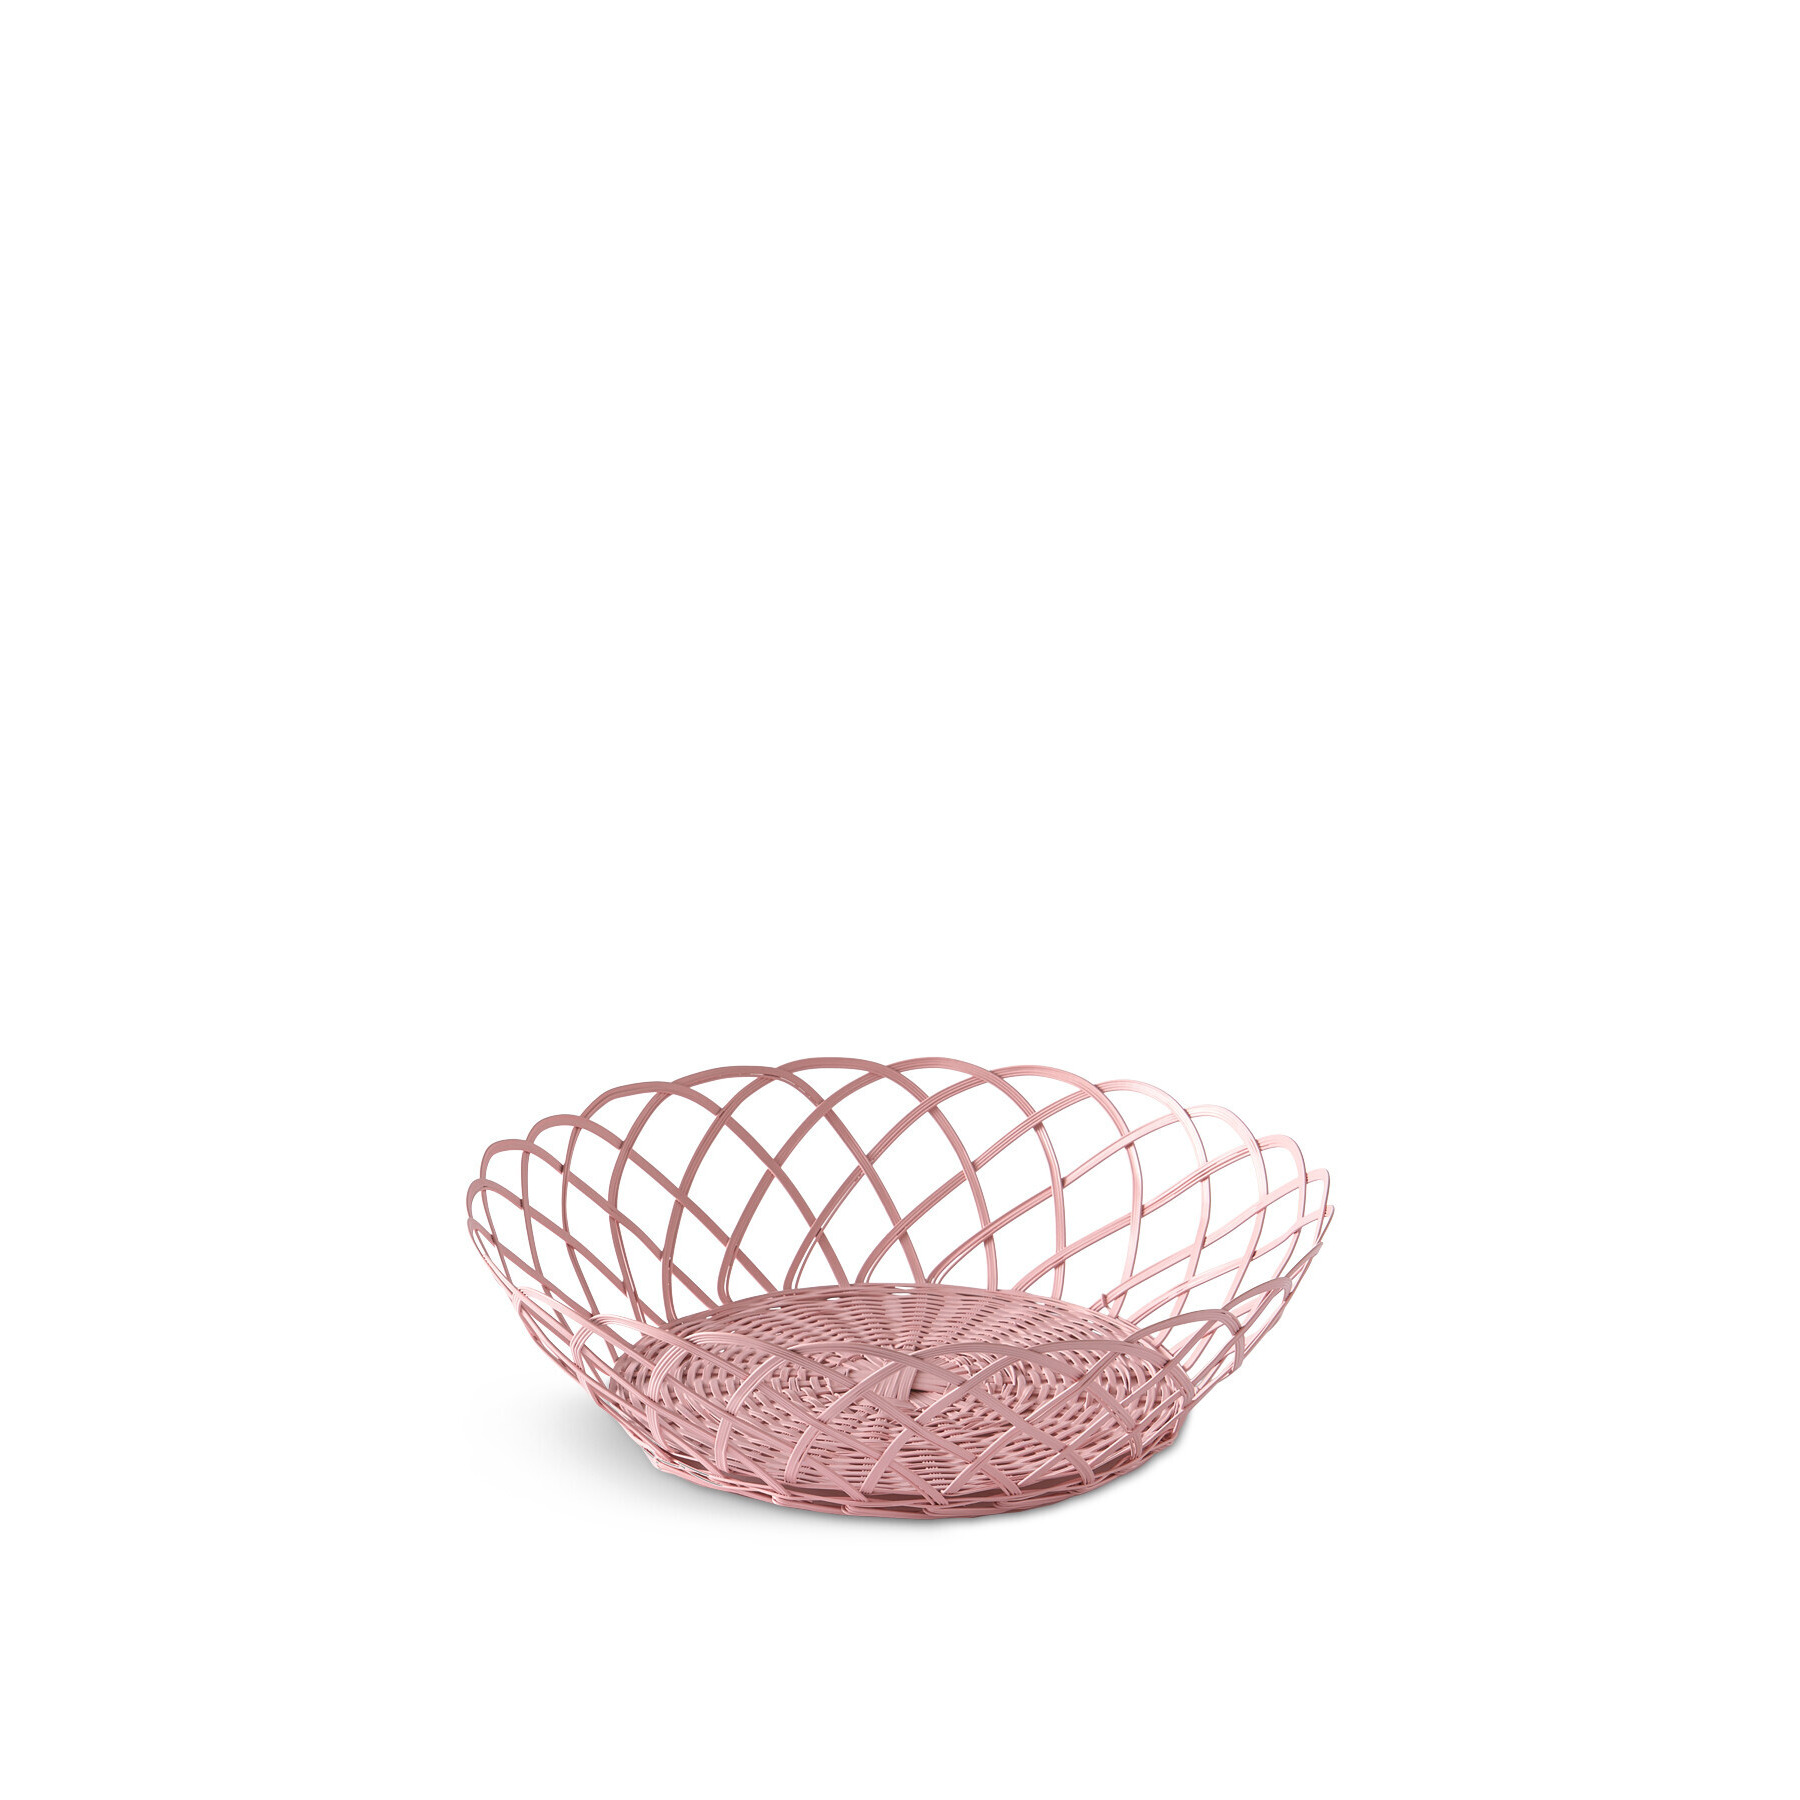 POLSPOTTEN Bakkie Basket Lace L Pink - image 1